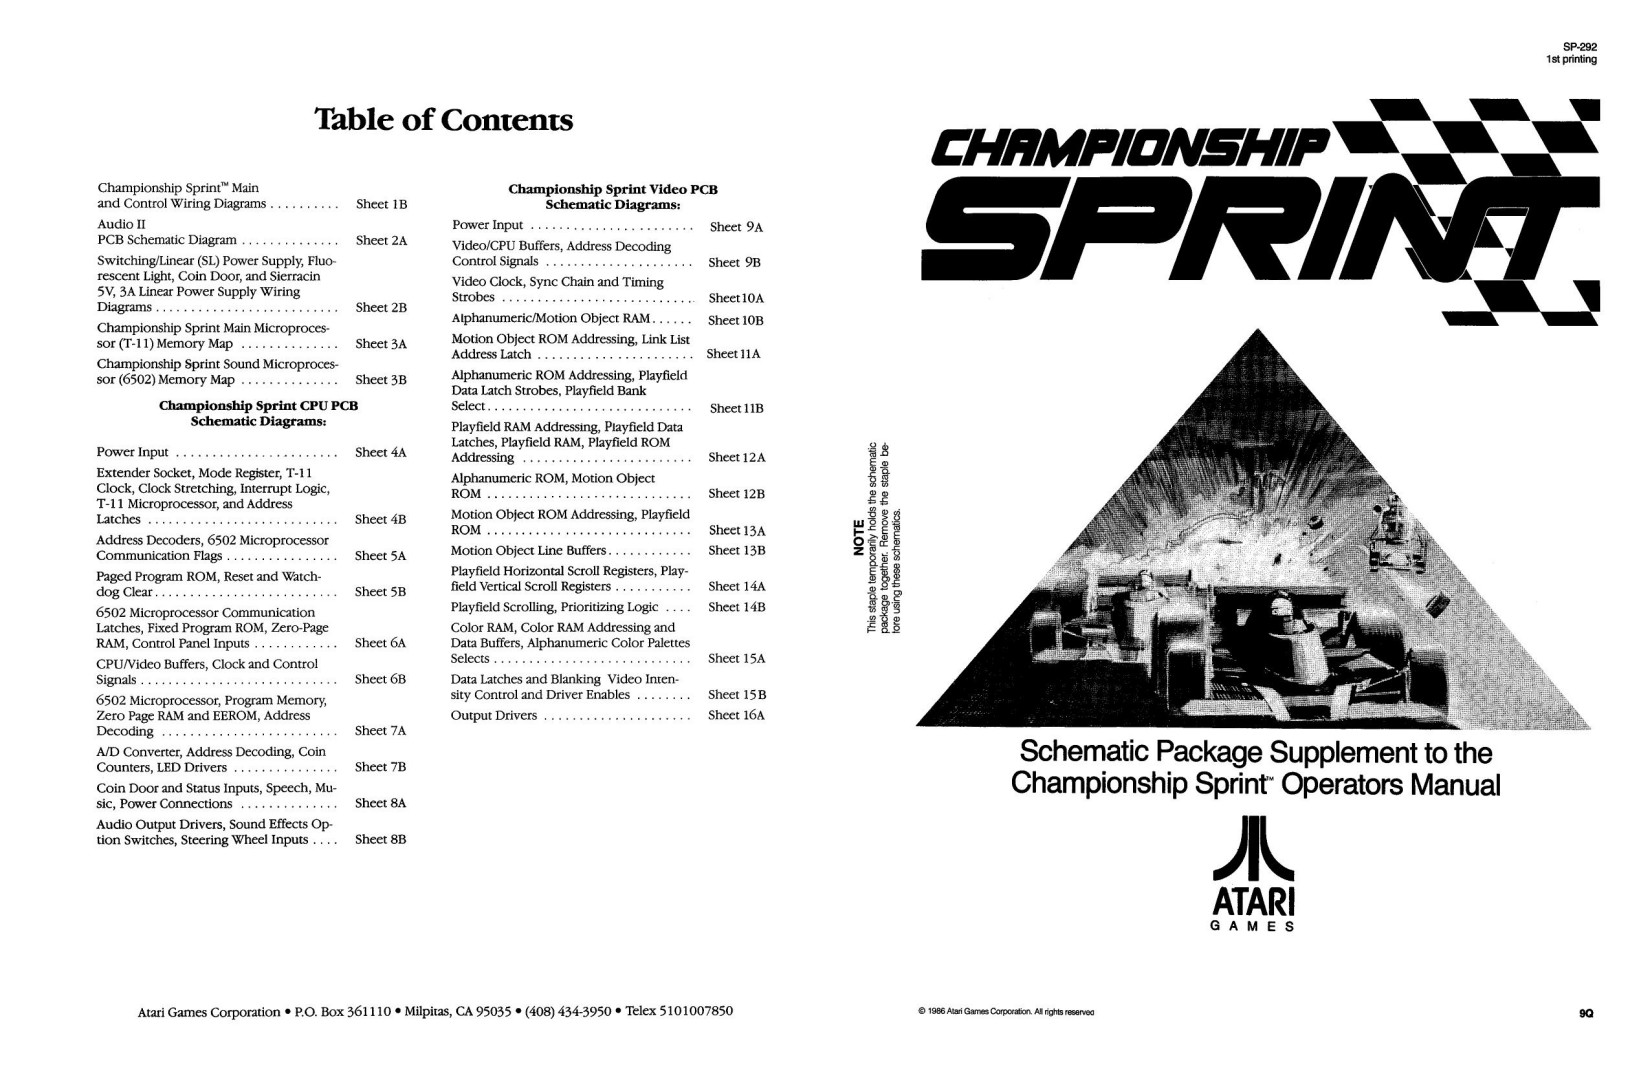 Championship Sprint Schematic SP-292 1st Printing